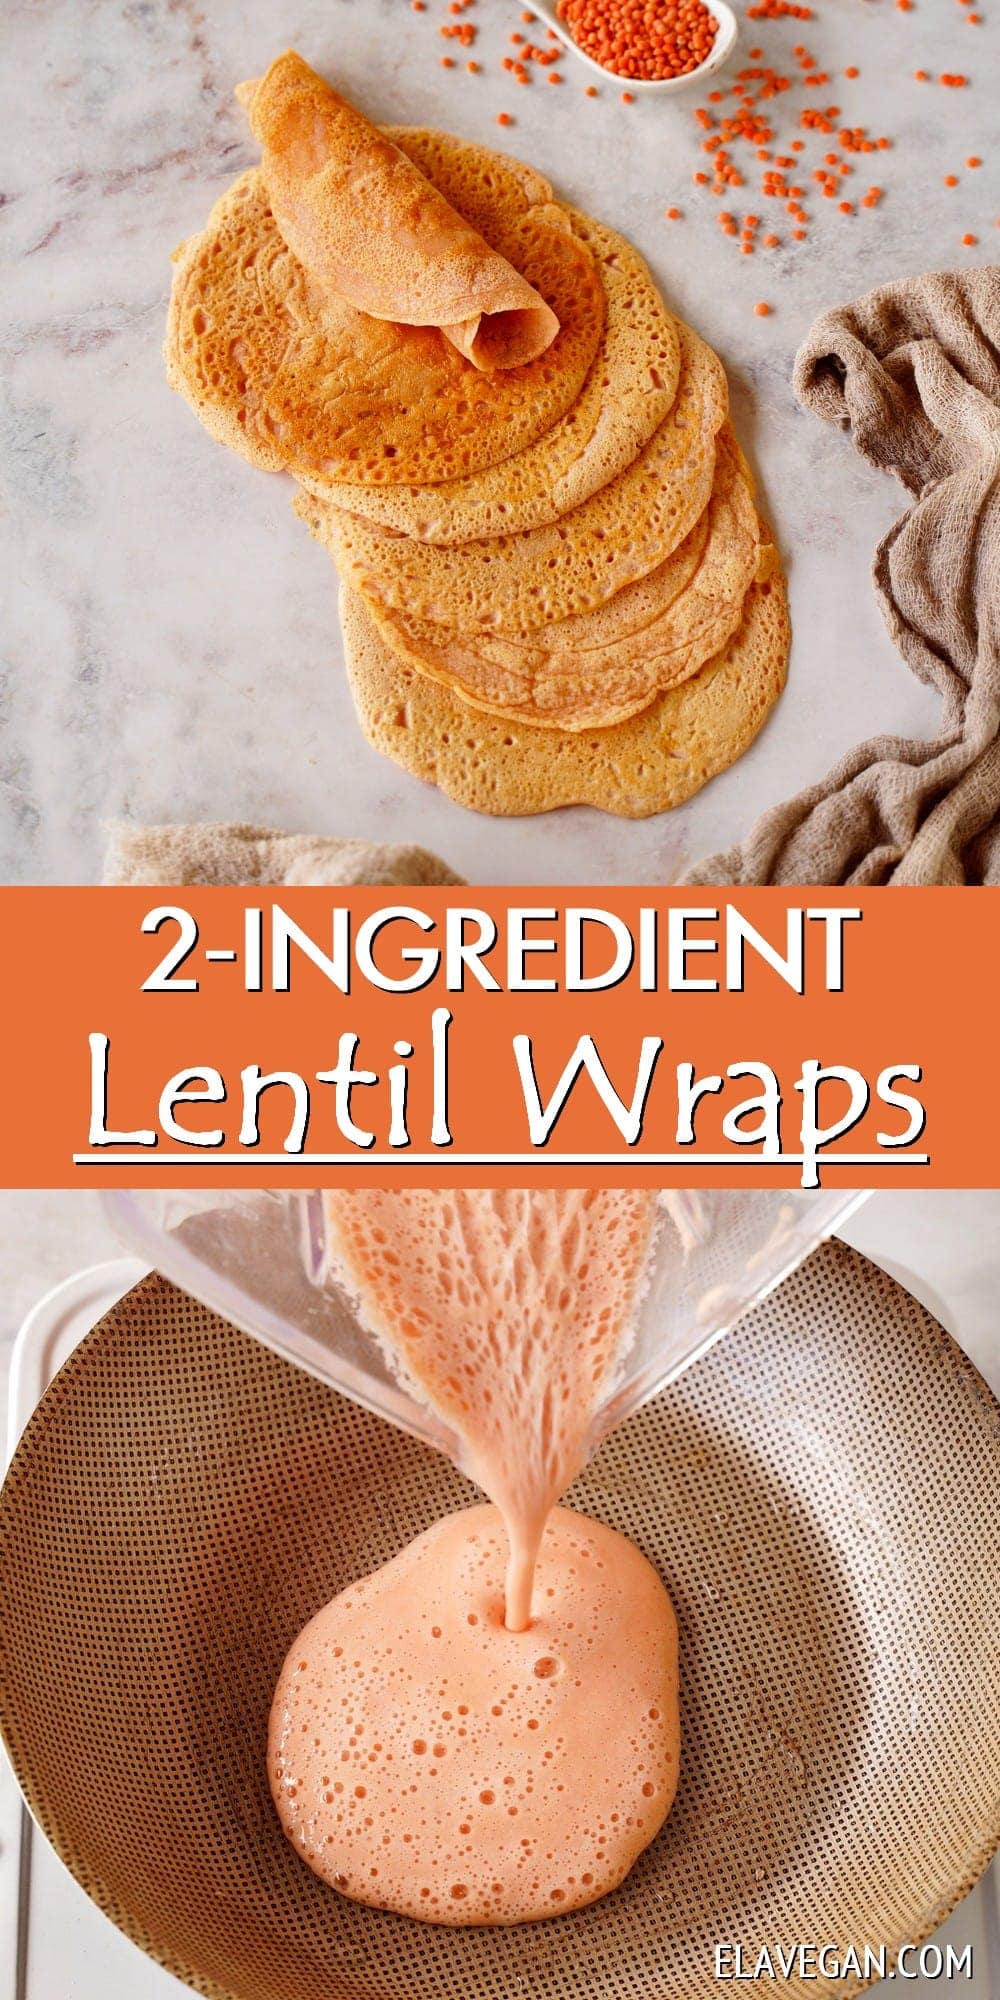 Pinterest Collage 2-ingredient lentil wraps